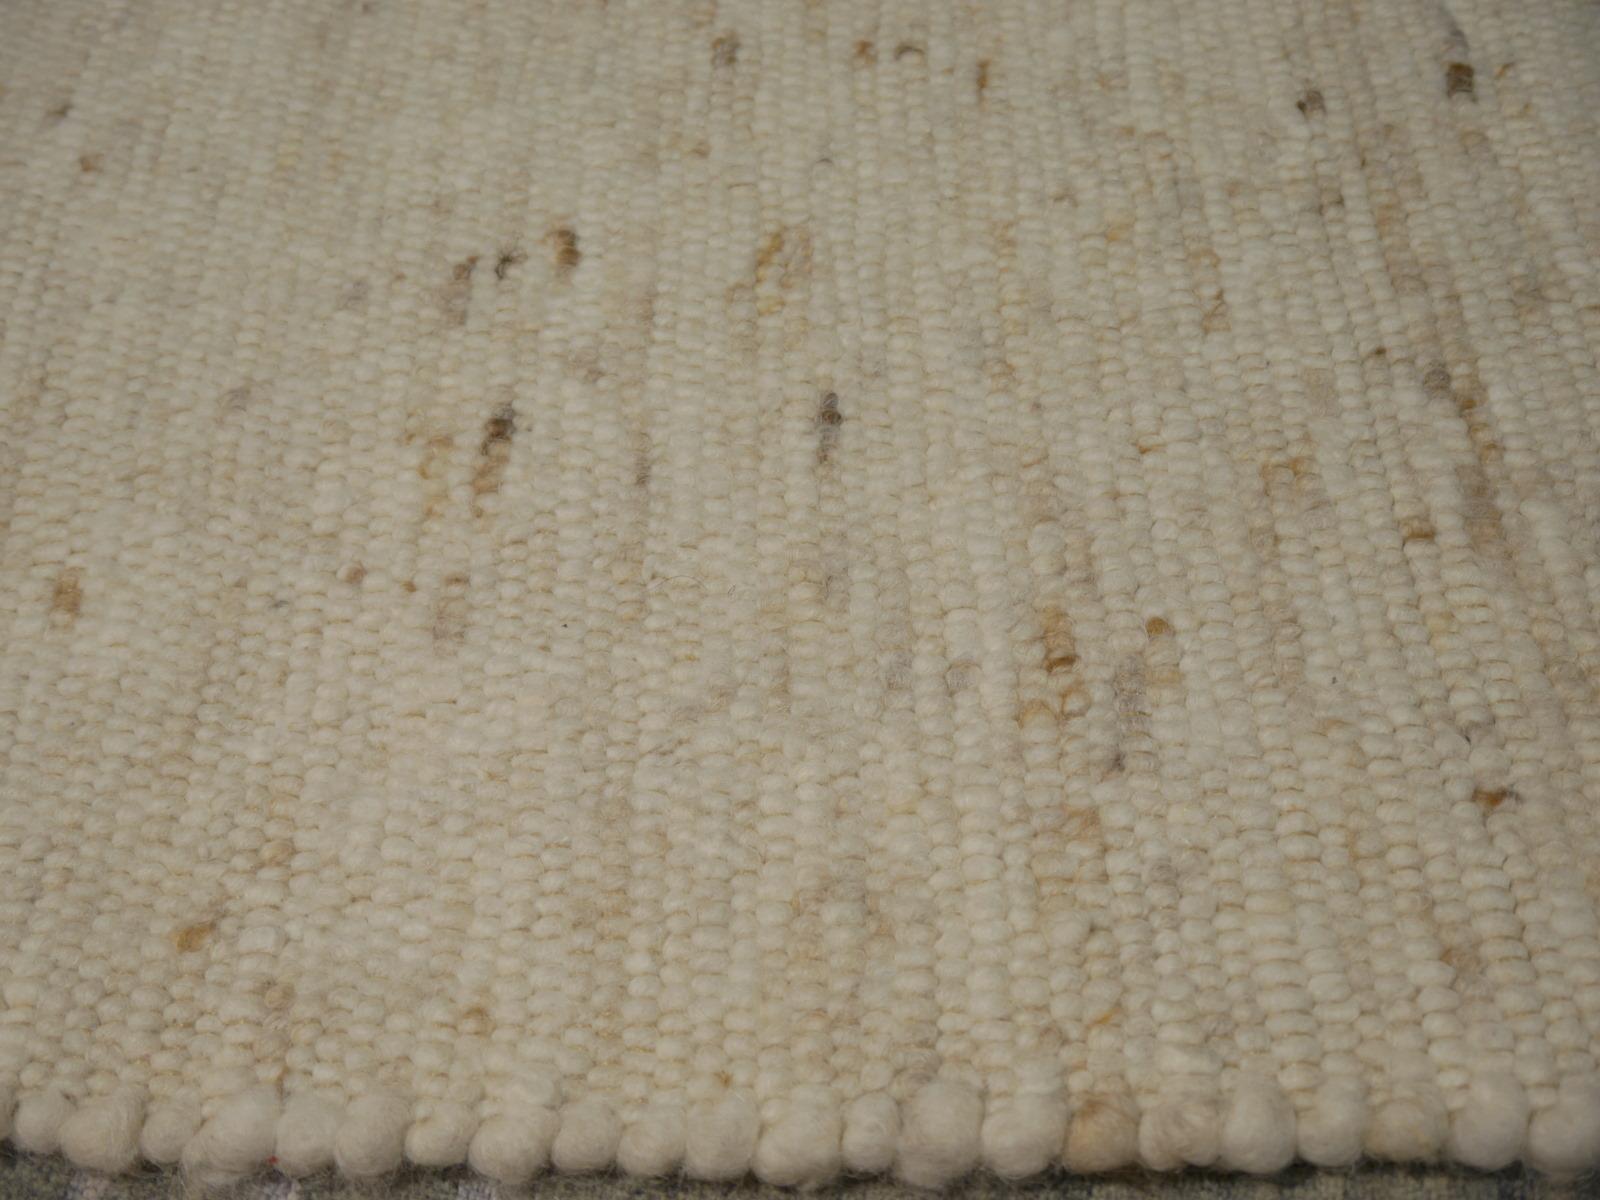 Contemporary Rustic Beige Kilim Rug Wool Flat Hand-Woven European Carpet by Djoharian Design For Sale